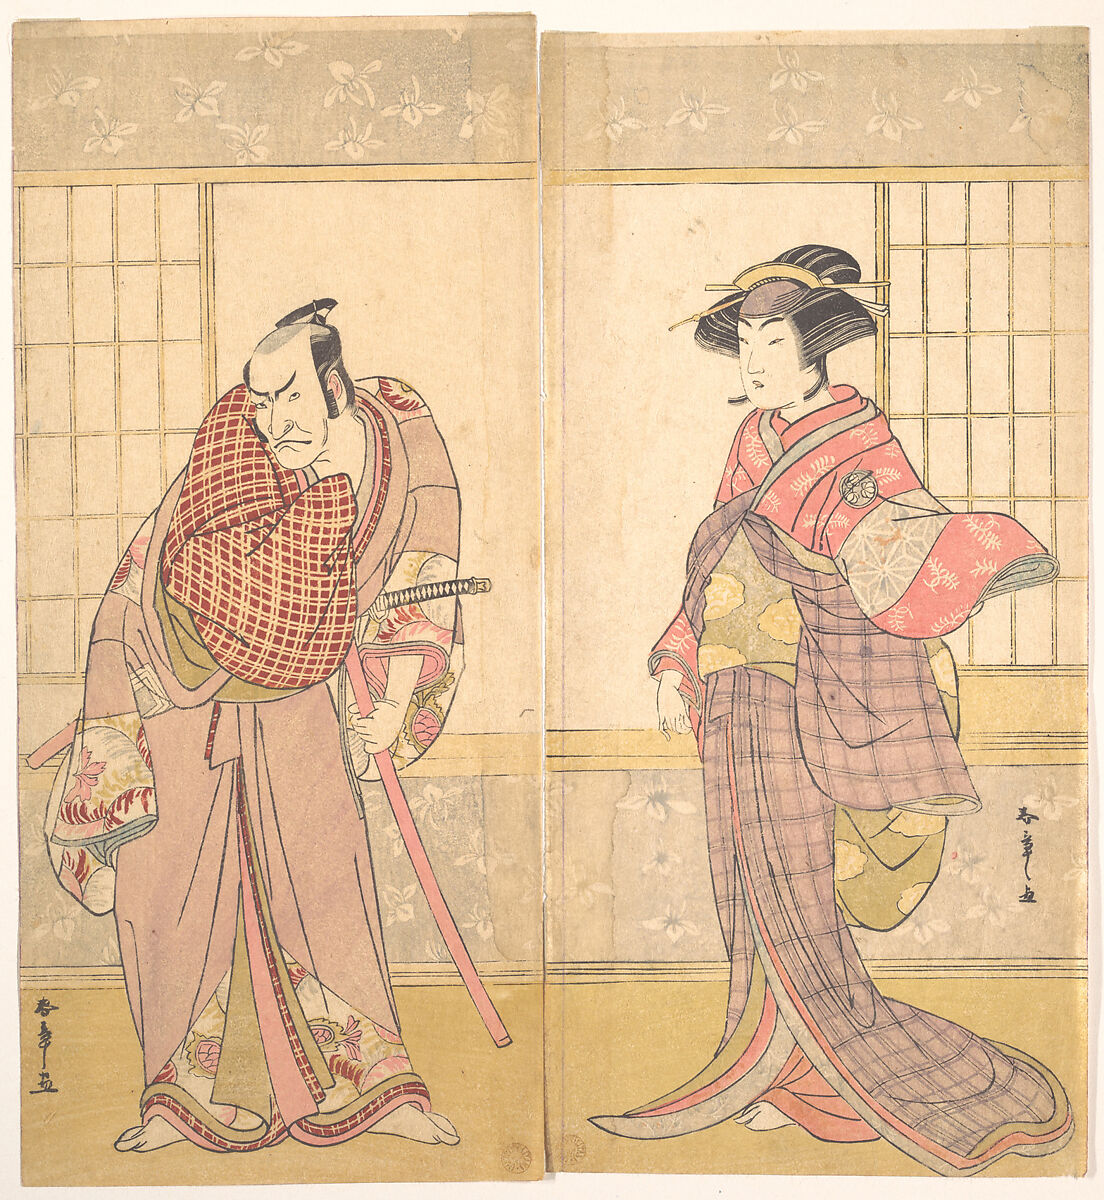 The Fifth Ichikawa Danjuro as a Man Standing in a Room, Katsukawa Shunshō　勝川春章 (Japanese, 1726–1792), Diptych of woodblock prints (nishiki-e); ink and color on paper, Japan 